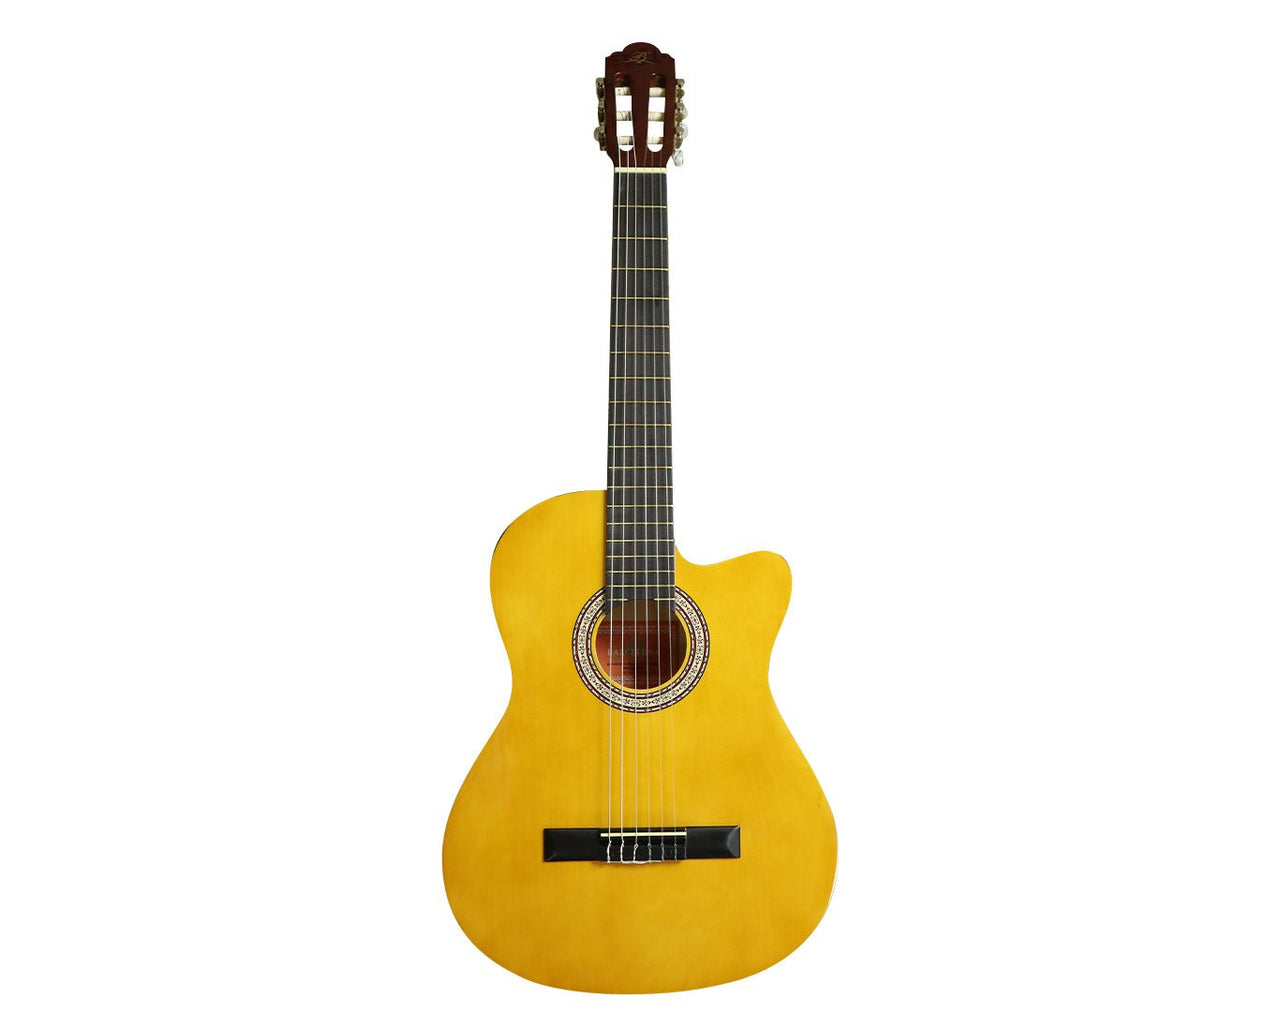 39" Classic Acoustic Guitar Cutaway Nylon Strings Natural LC-3900C-YW